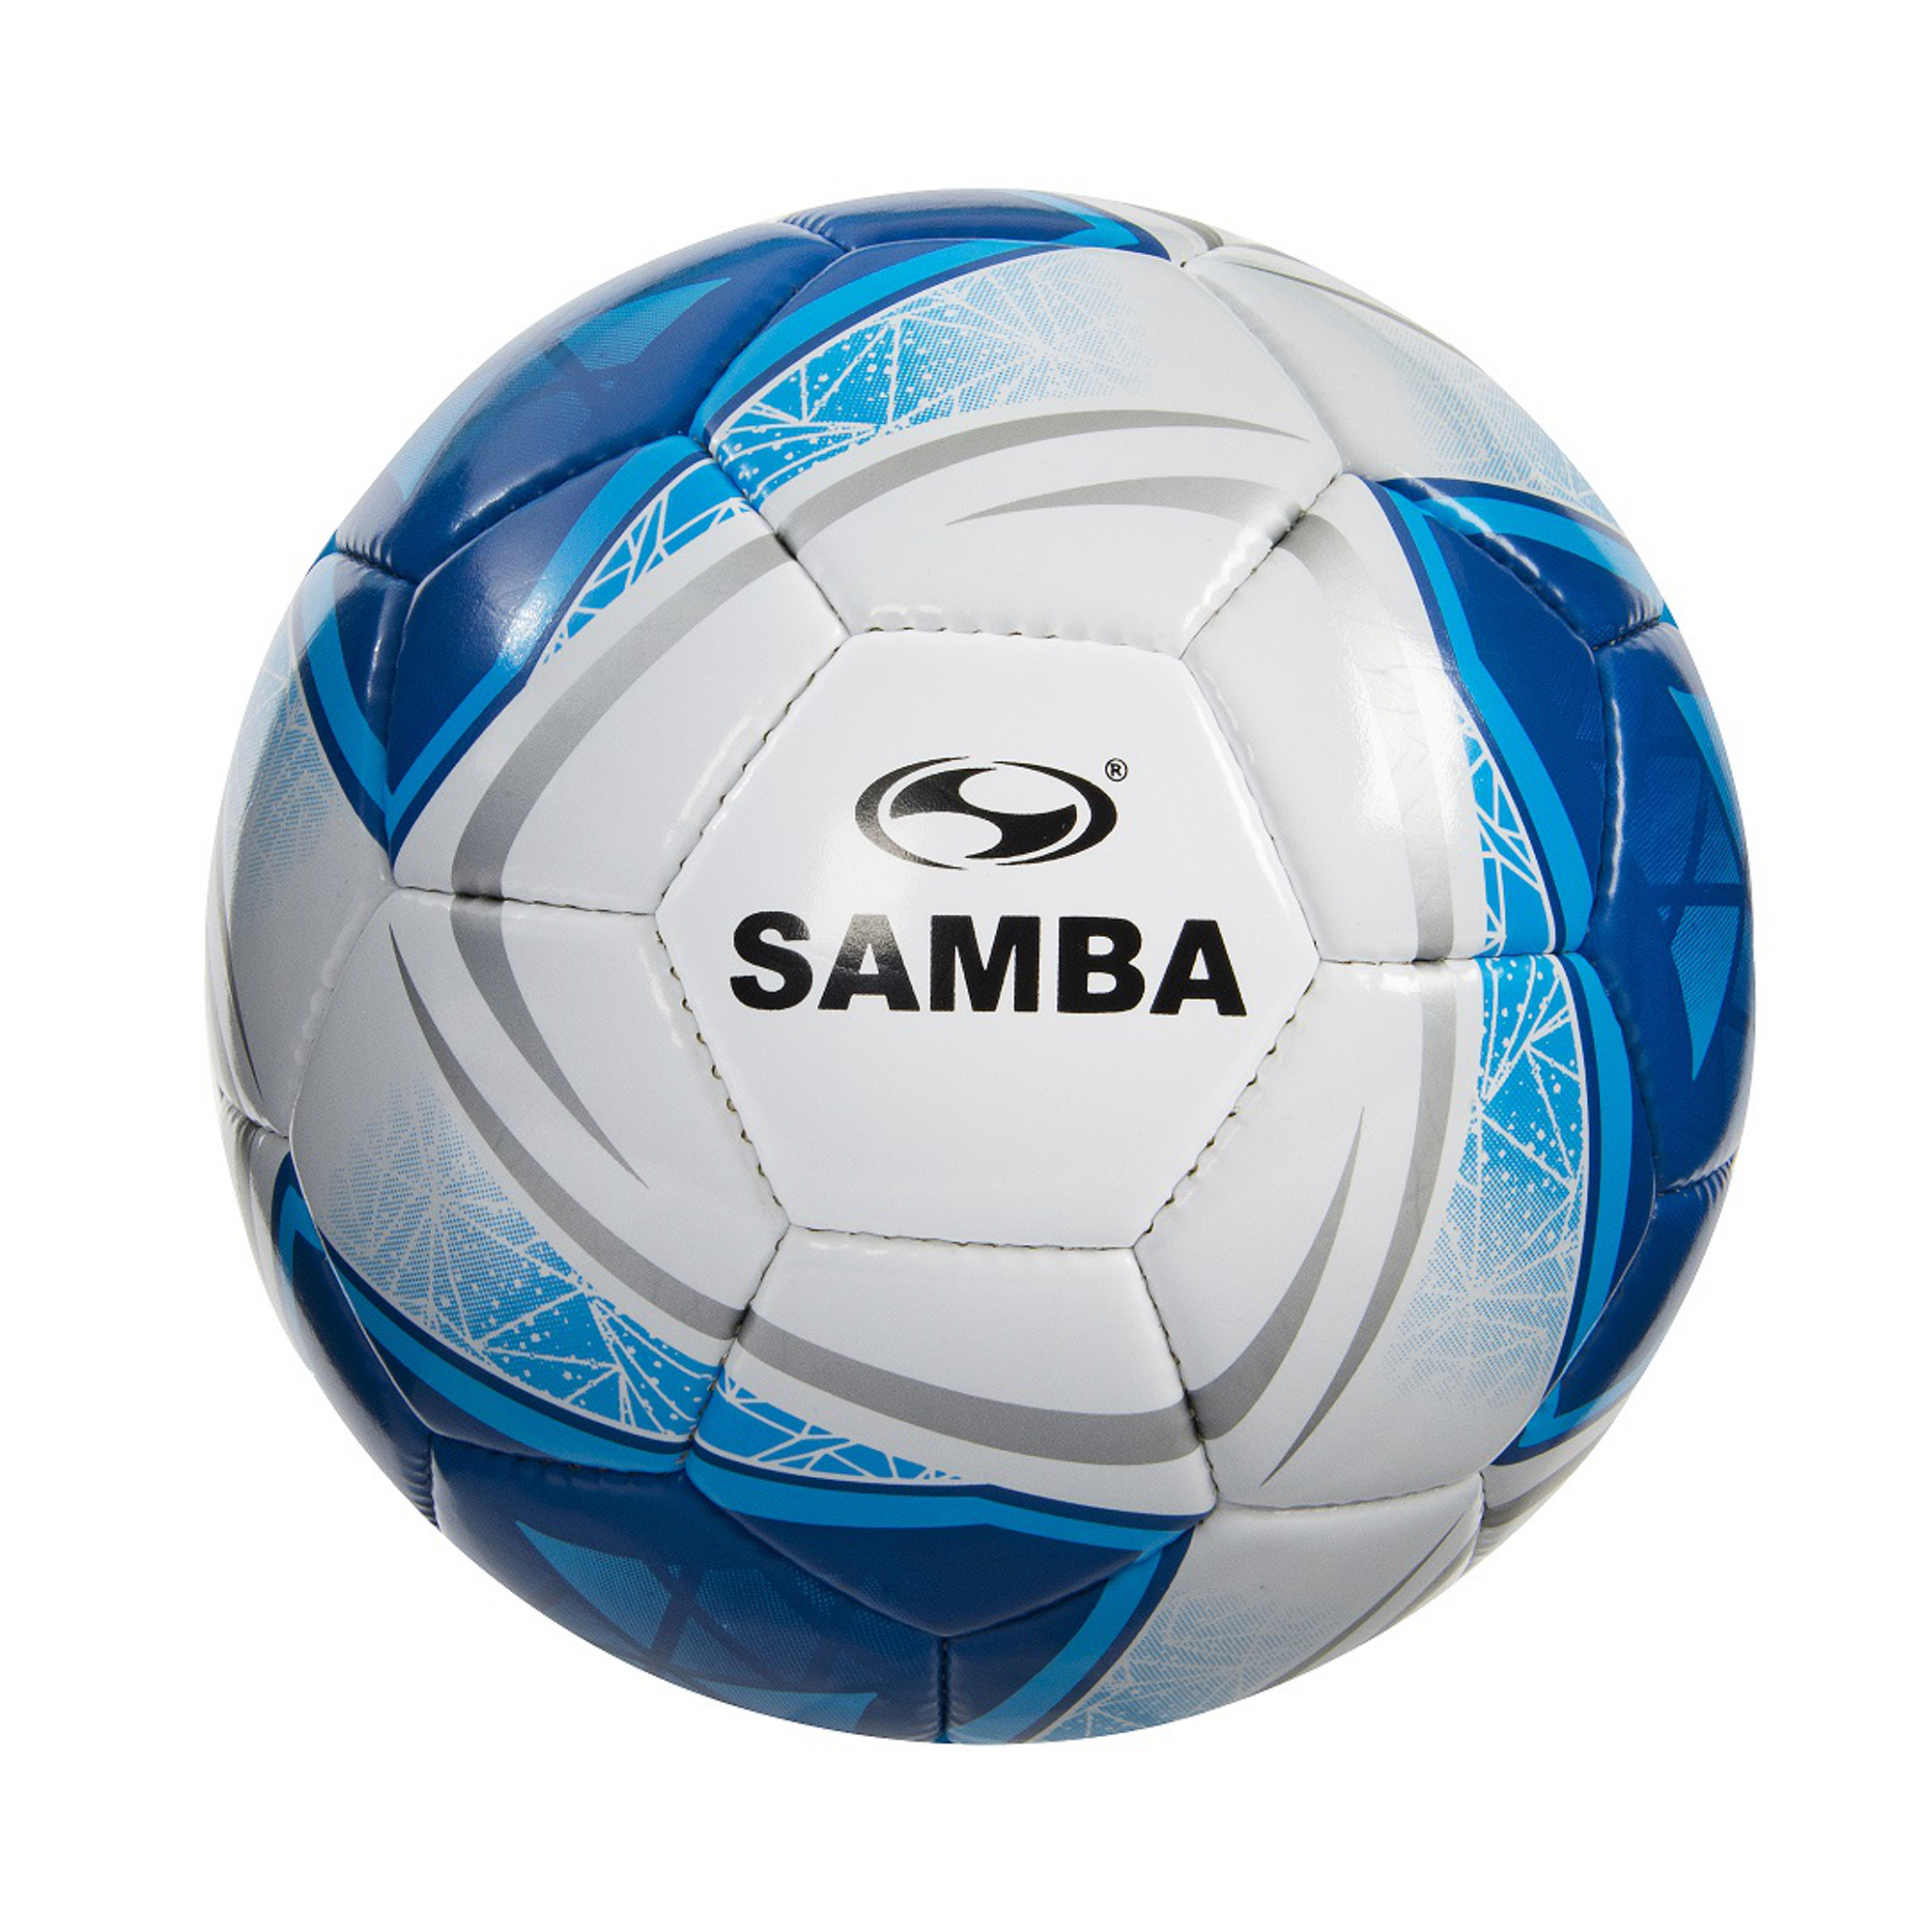 Samba Edu Football Wht Blu Slvr S3